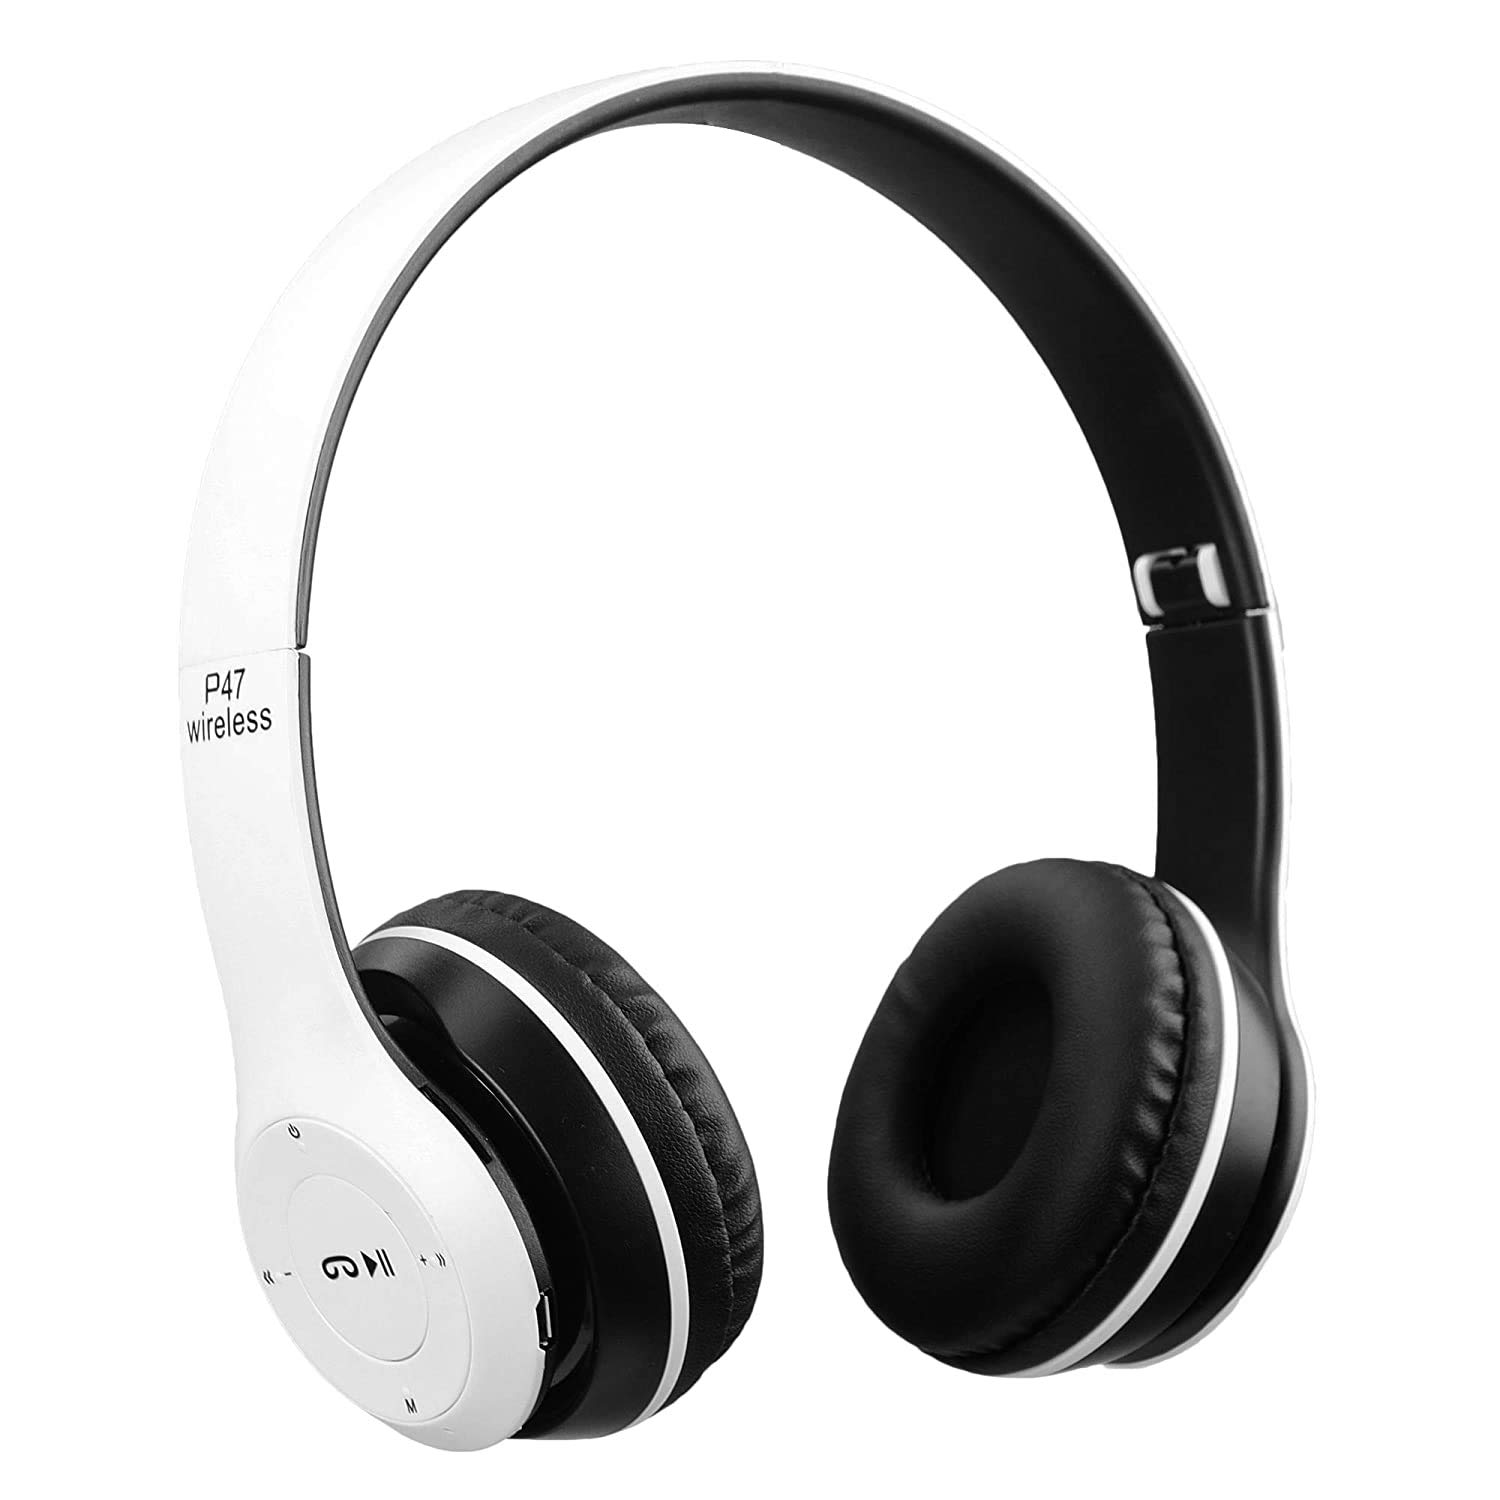 P47 Wireless Headphone Sports Adjustable Headphone with Mic Bluetooth Headset